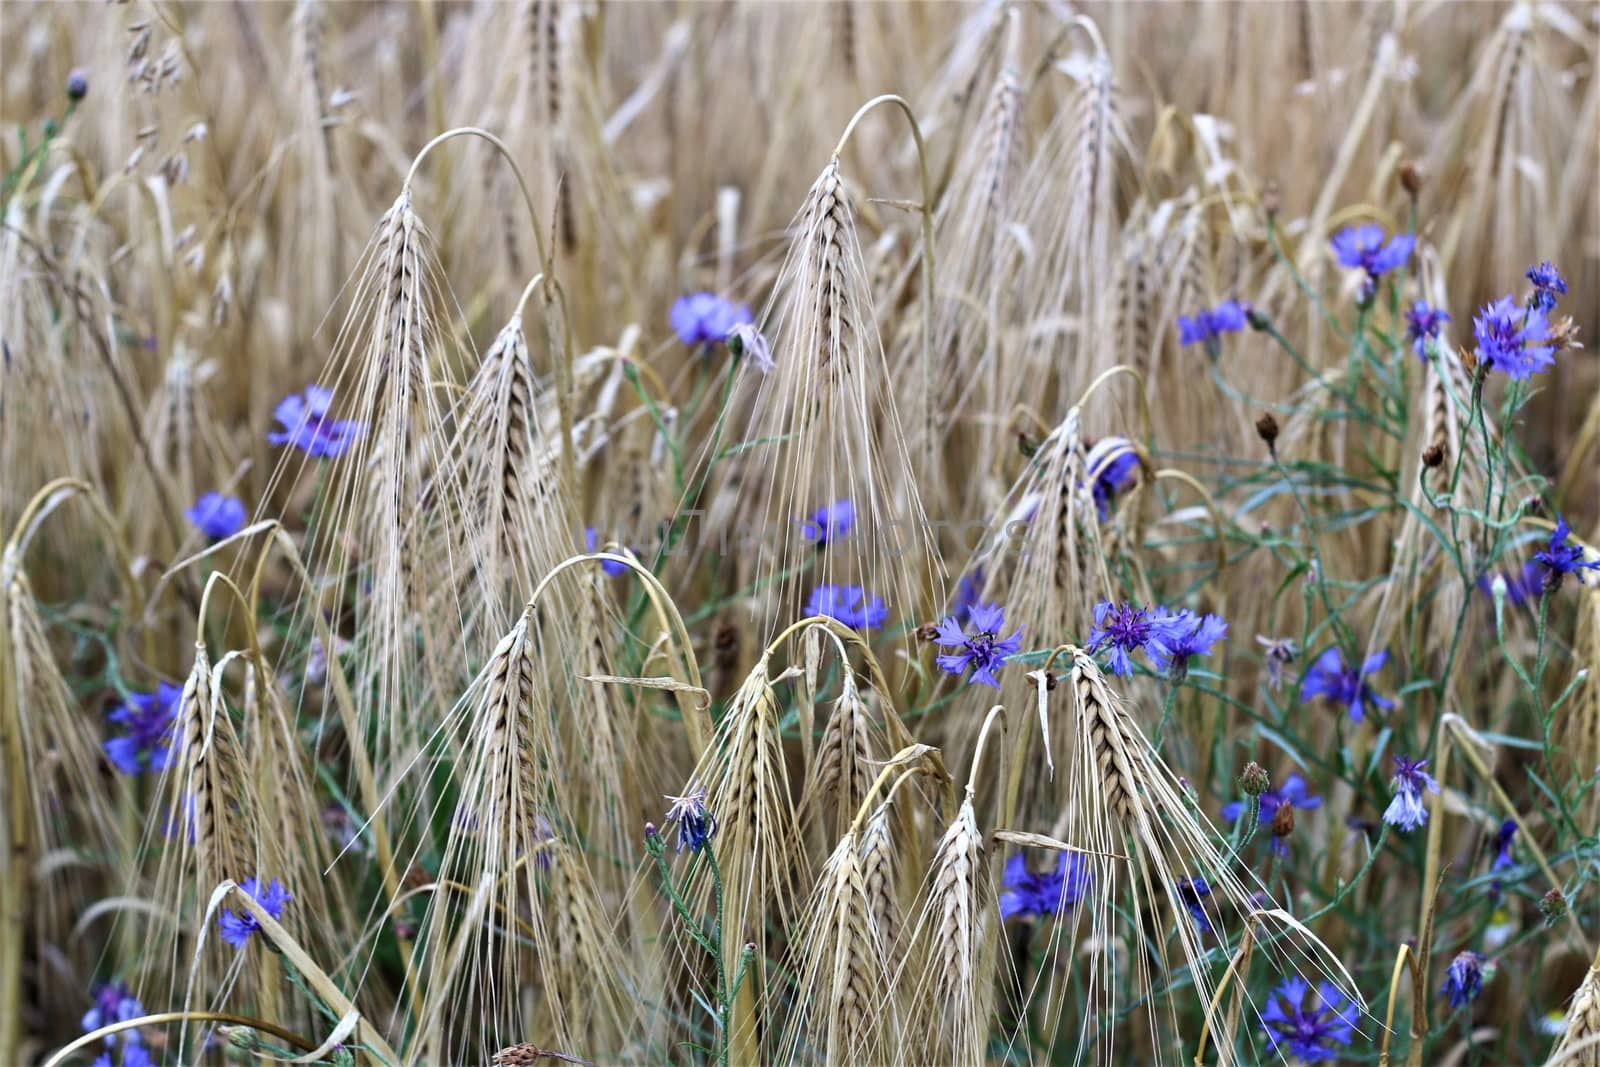 blue cornflowers between cereals in the field